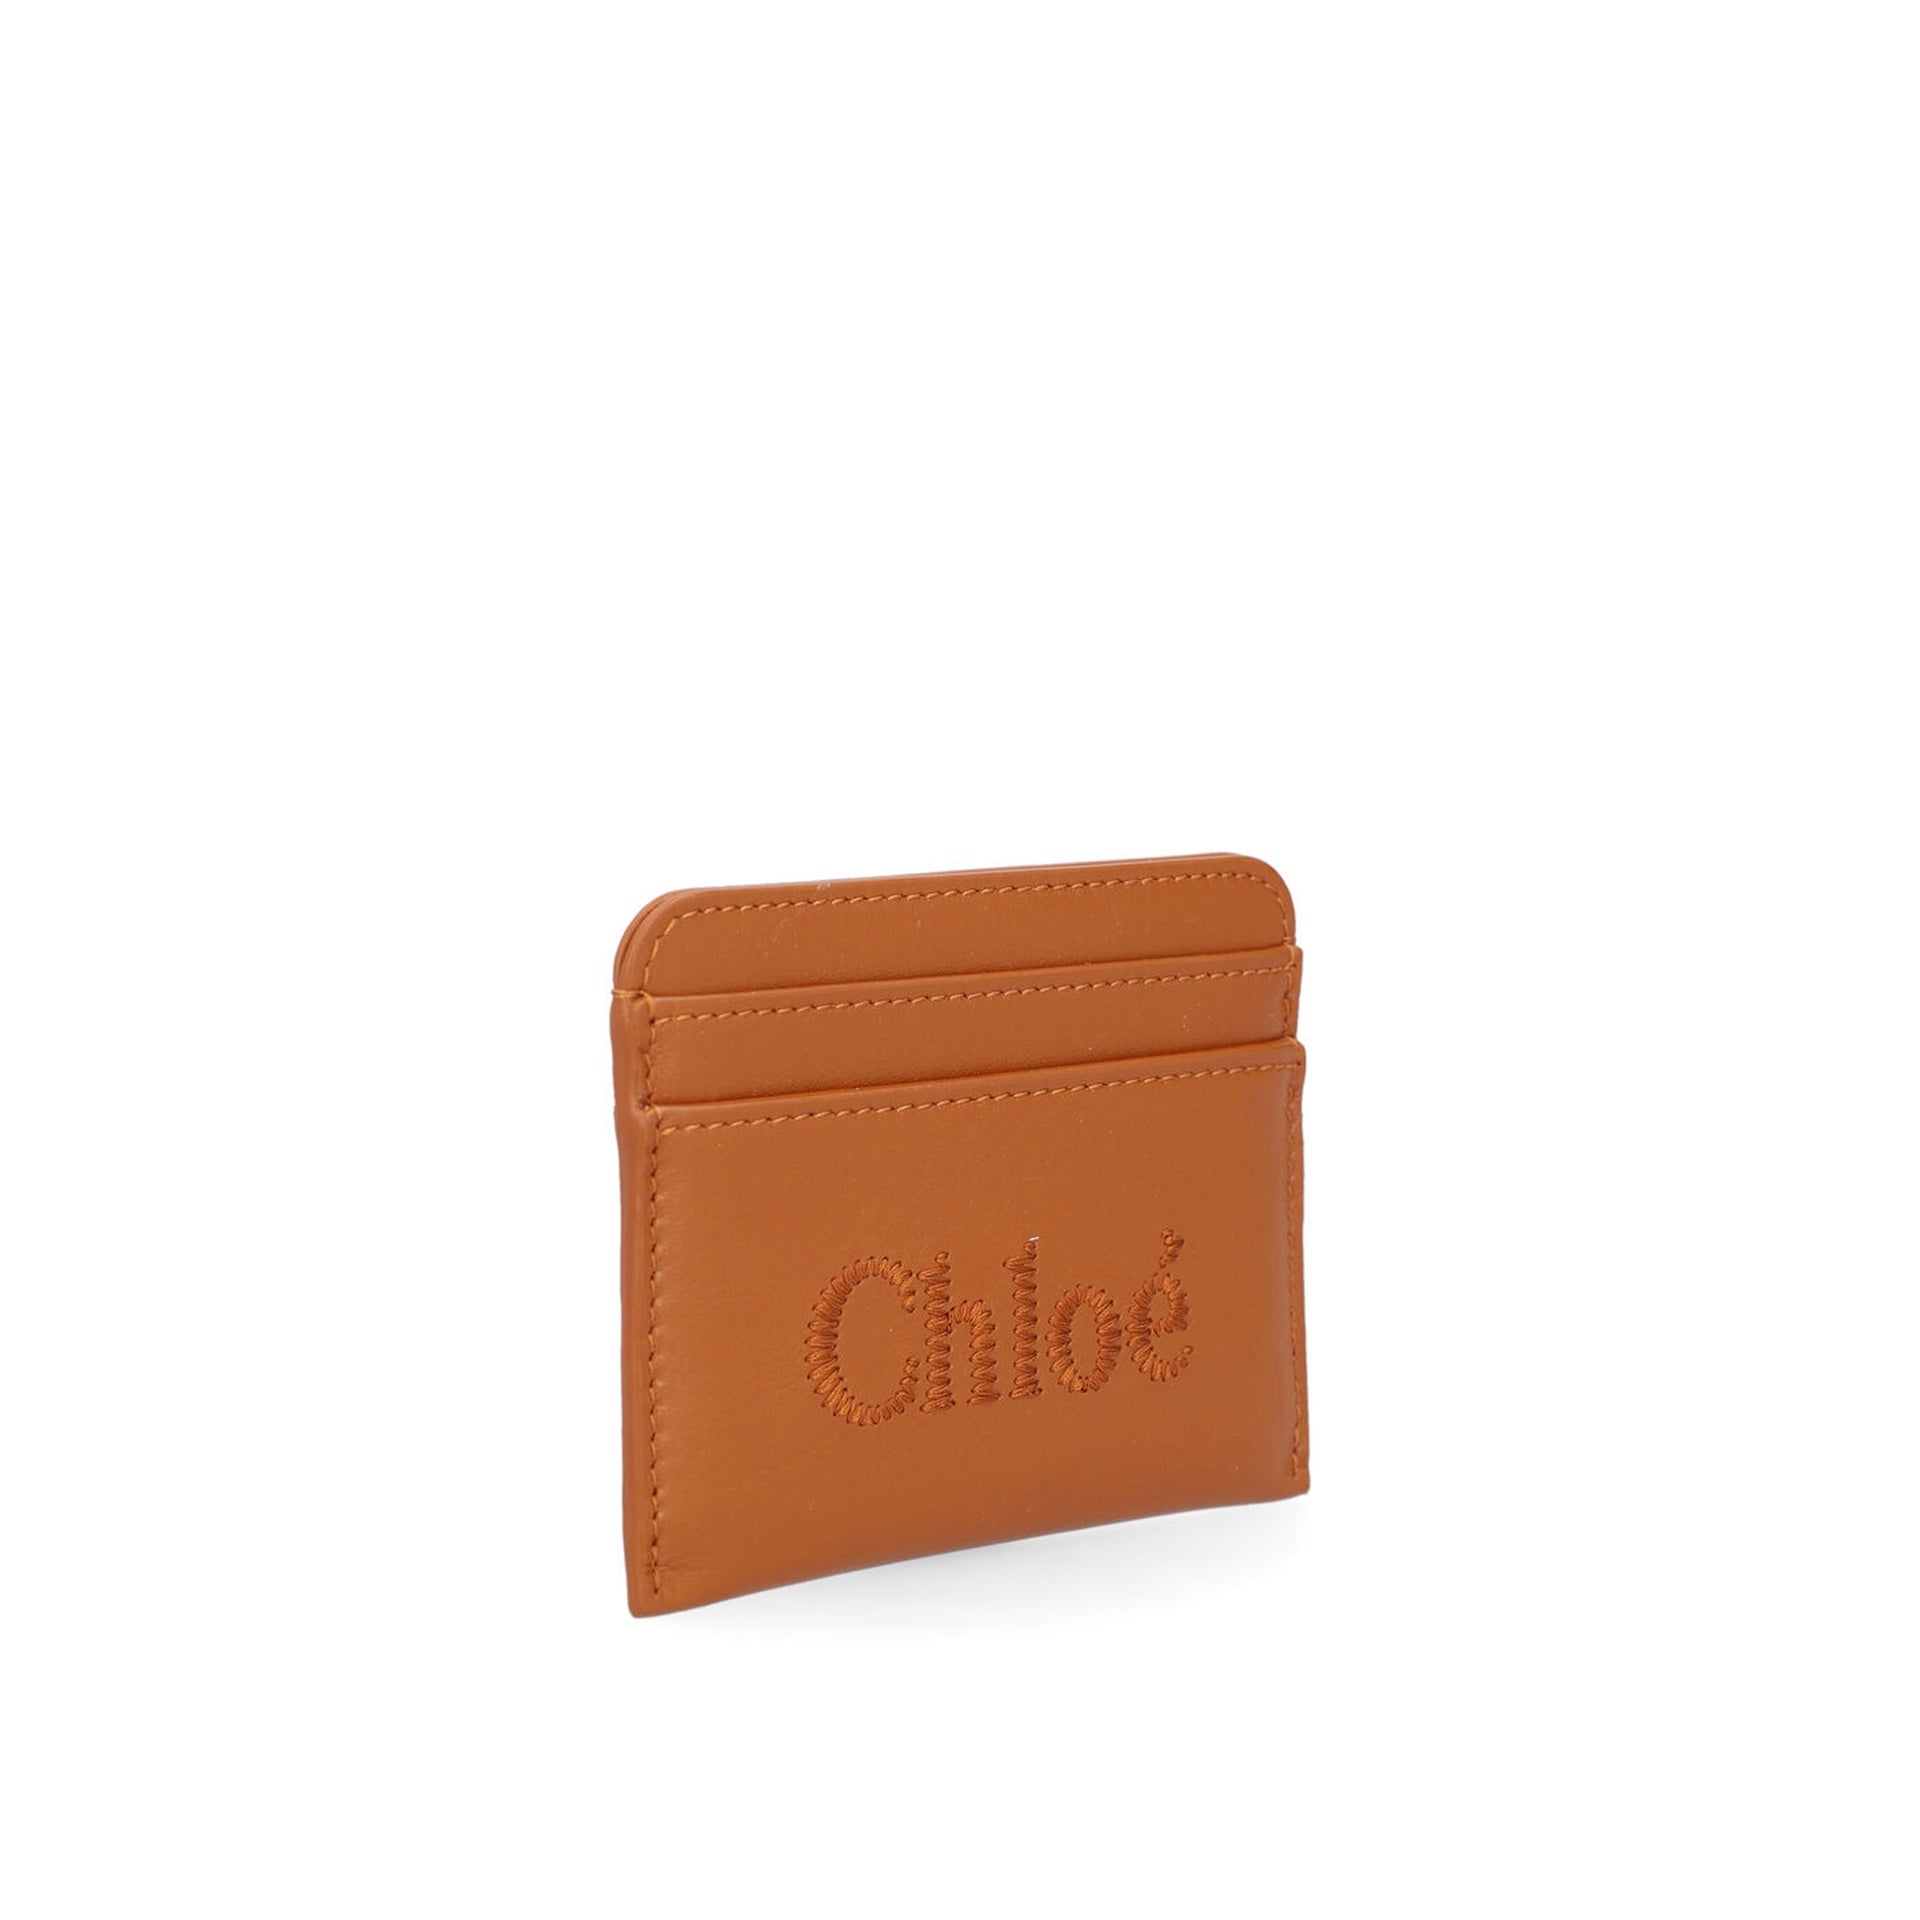 CHLOE-OUTLET-SALE-Chloe-Card-Holder-Taschen-BROWN-UNI-ARCHIVE-COLLECTION-2.jpg